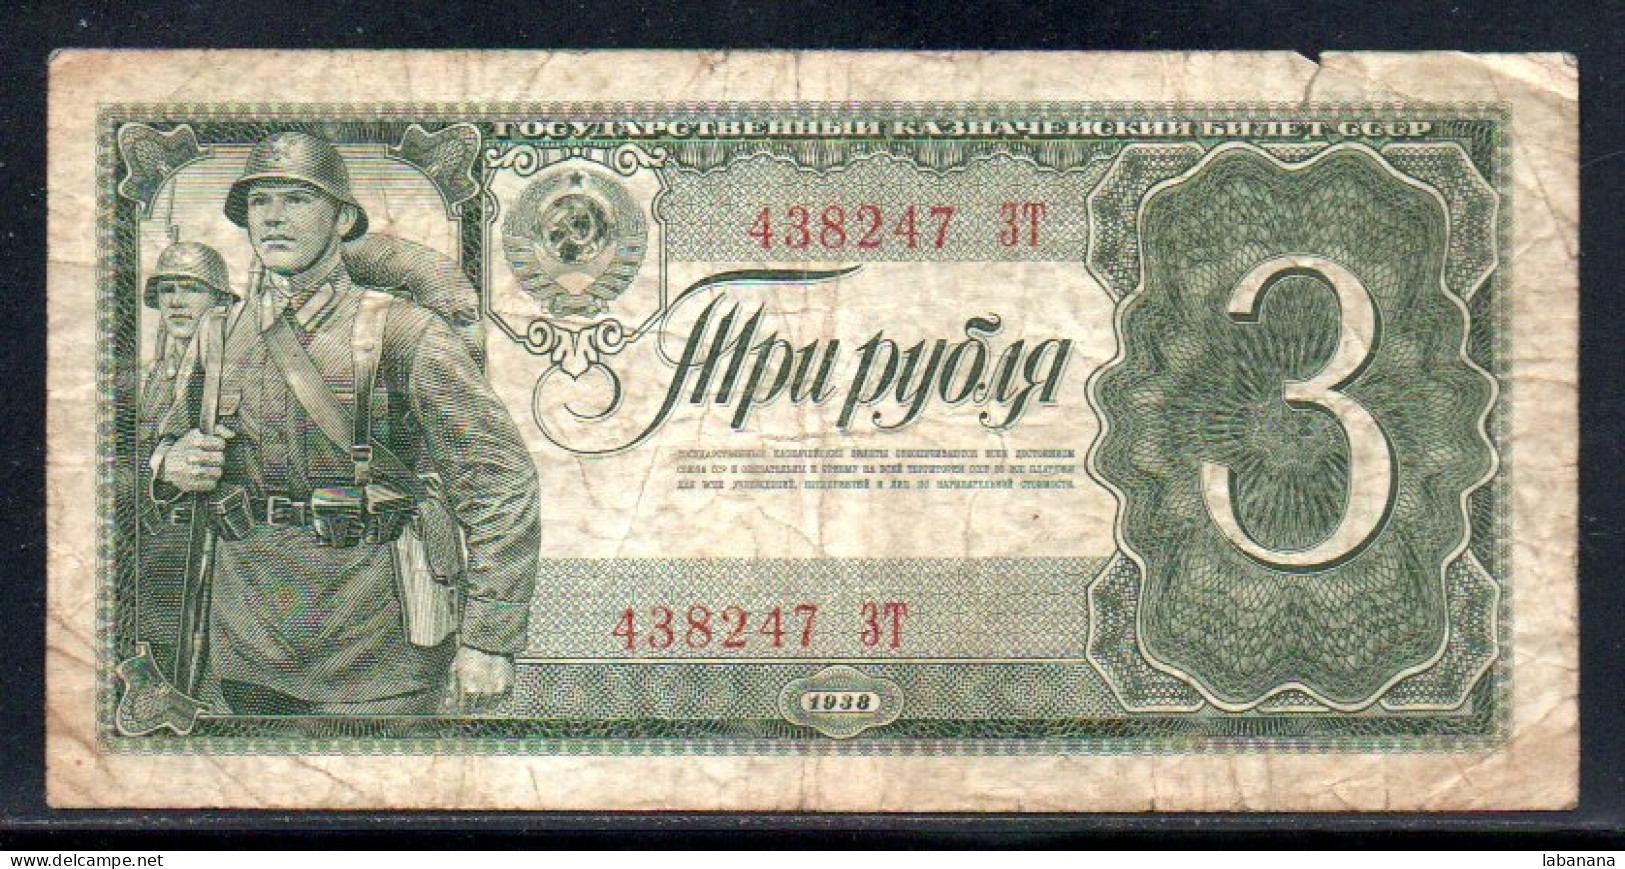 329-Russie 3 Roubles 1938 3T438 - Russie